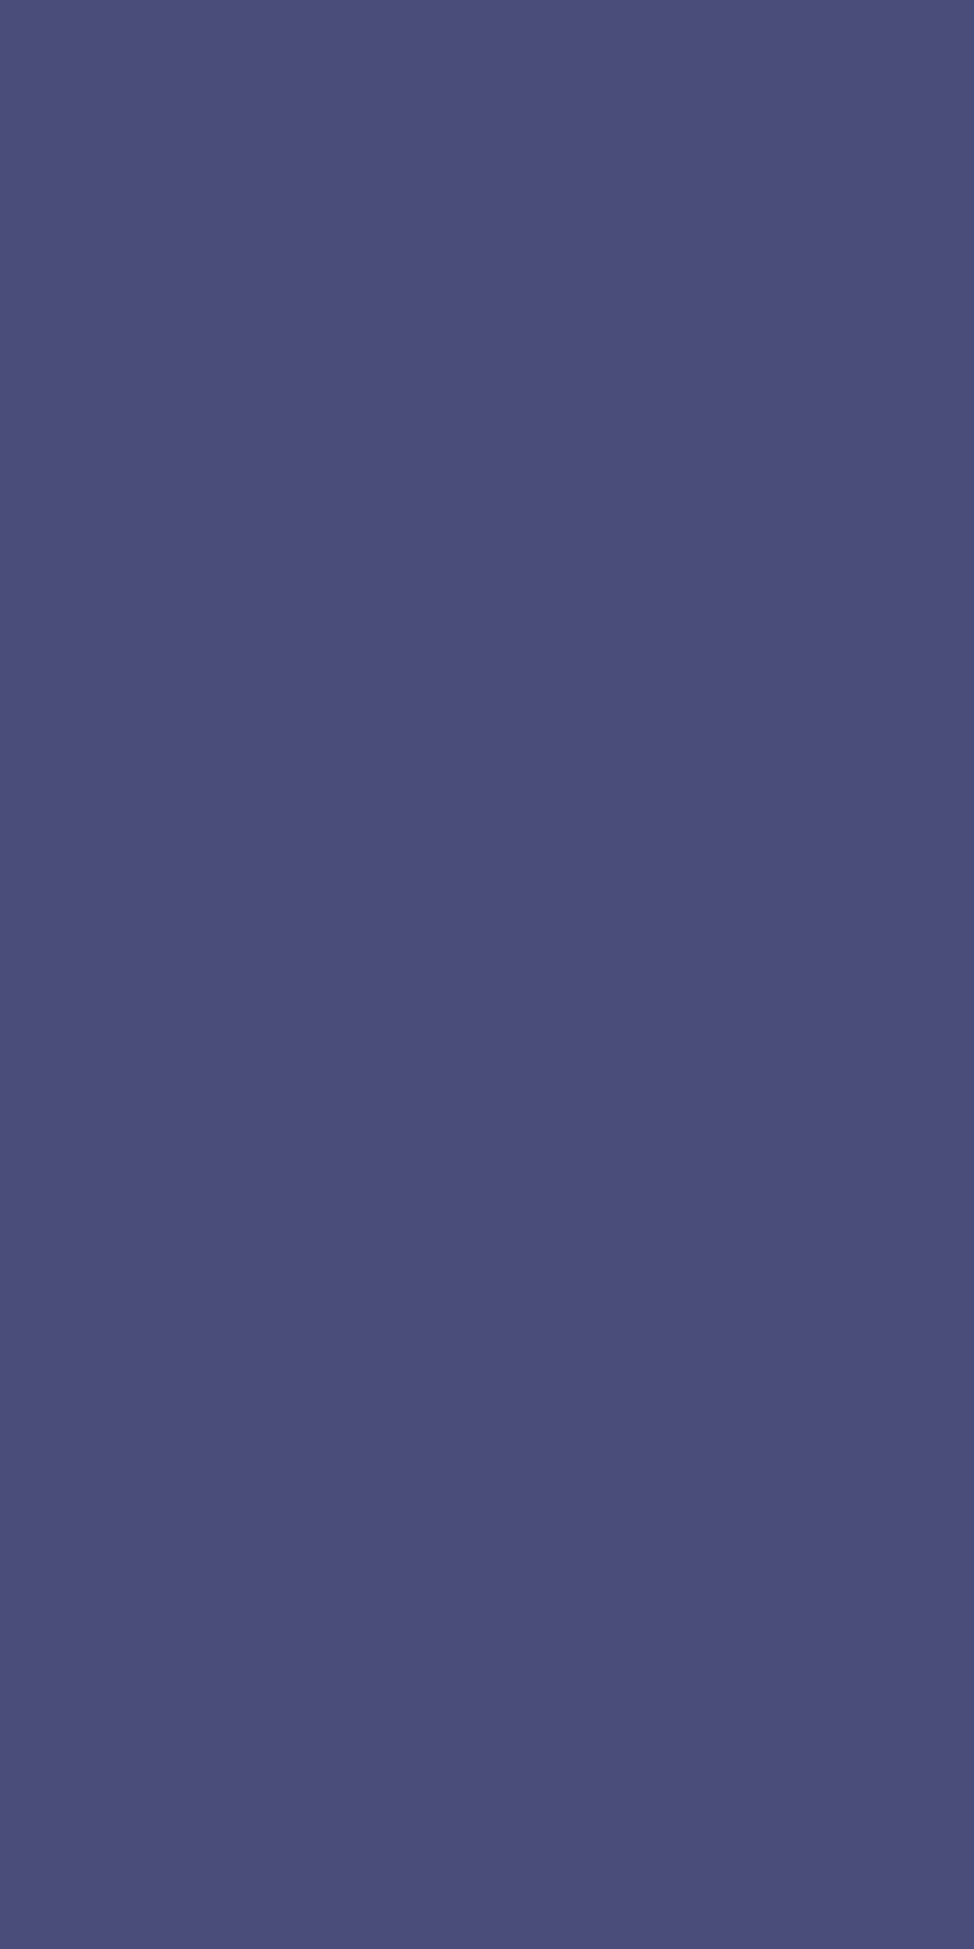 Zelltuchservietten Spenderfalz, 33 x 32 cm, dunkelblau